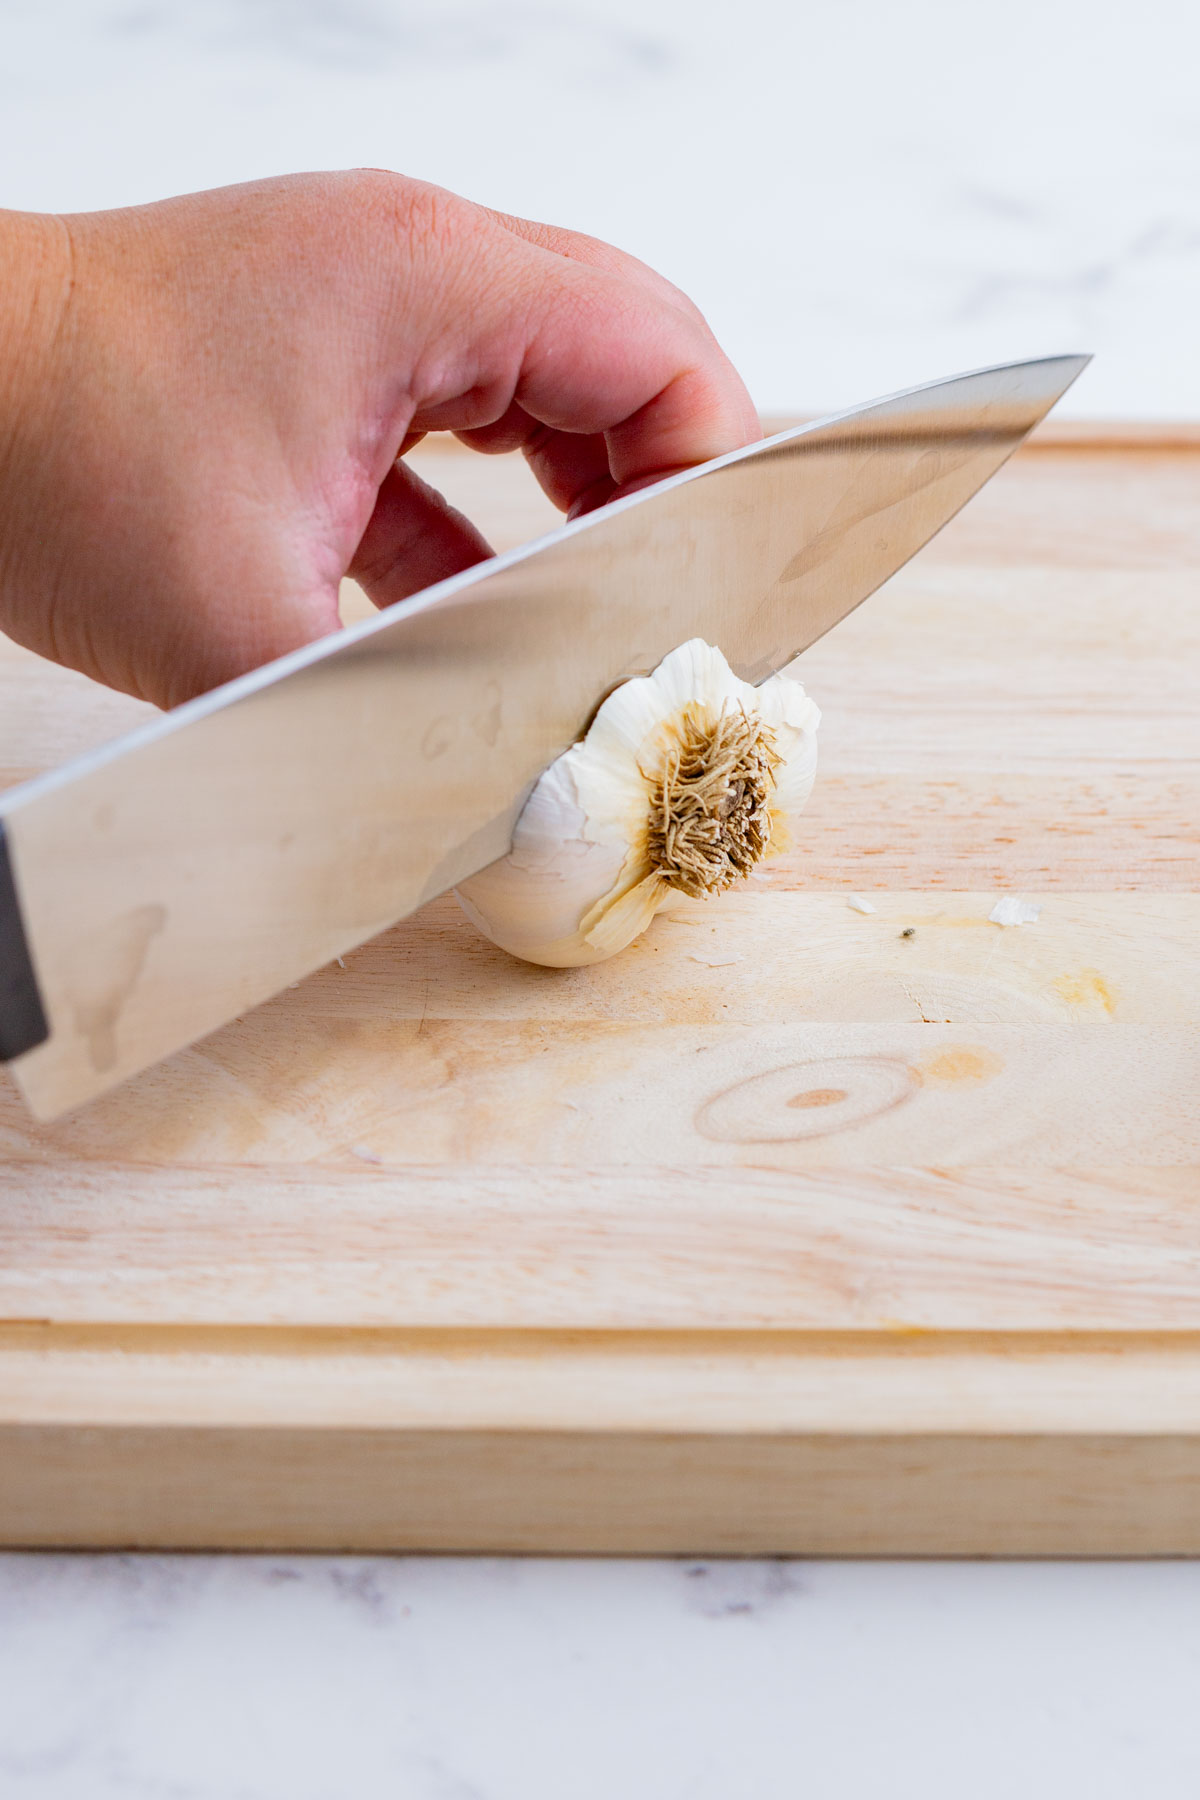 A knife cutting into a whole, unpeeled garlic head/bulb.